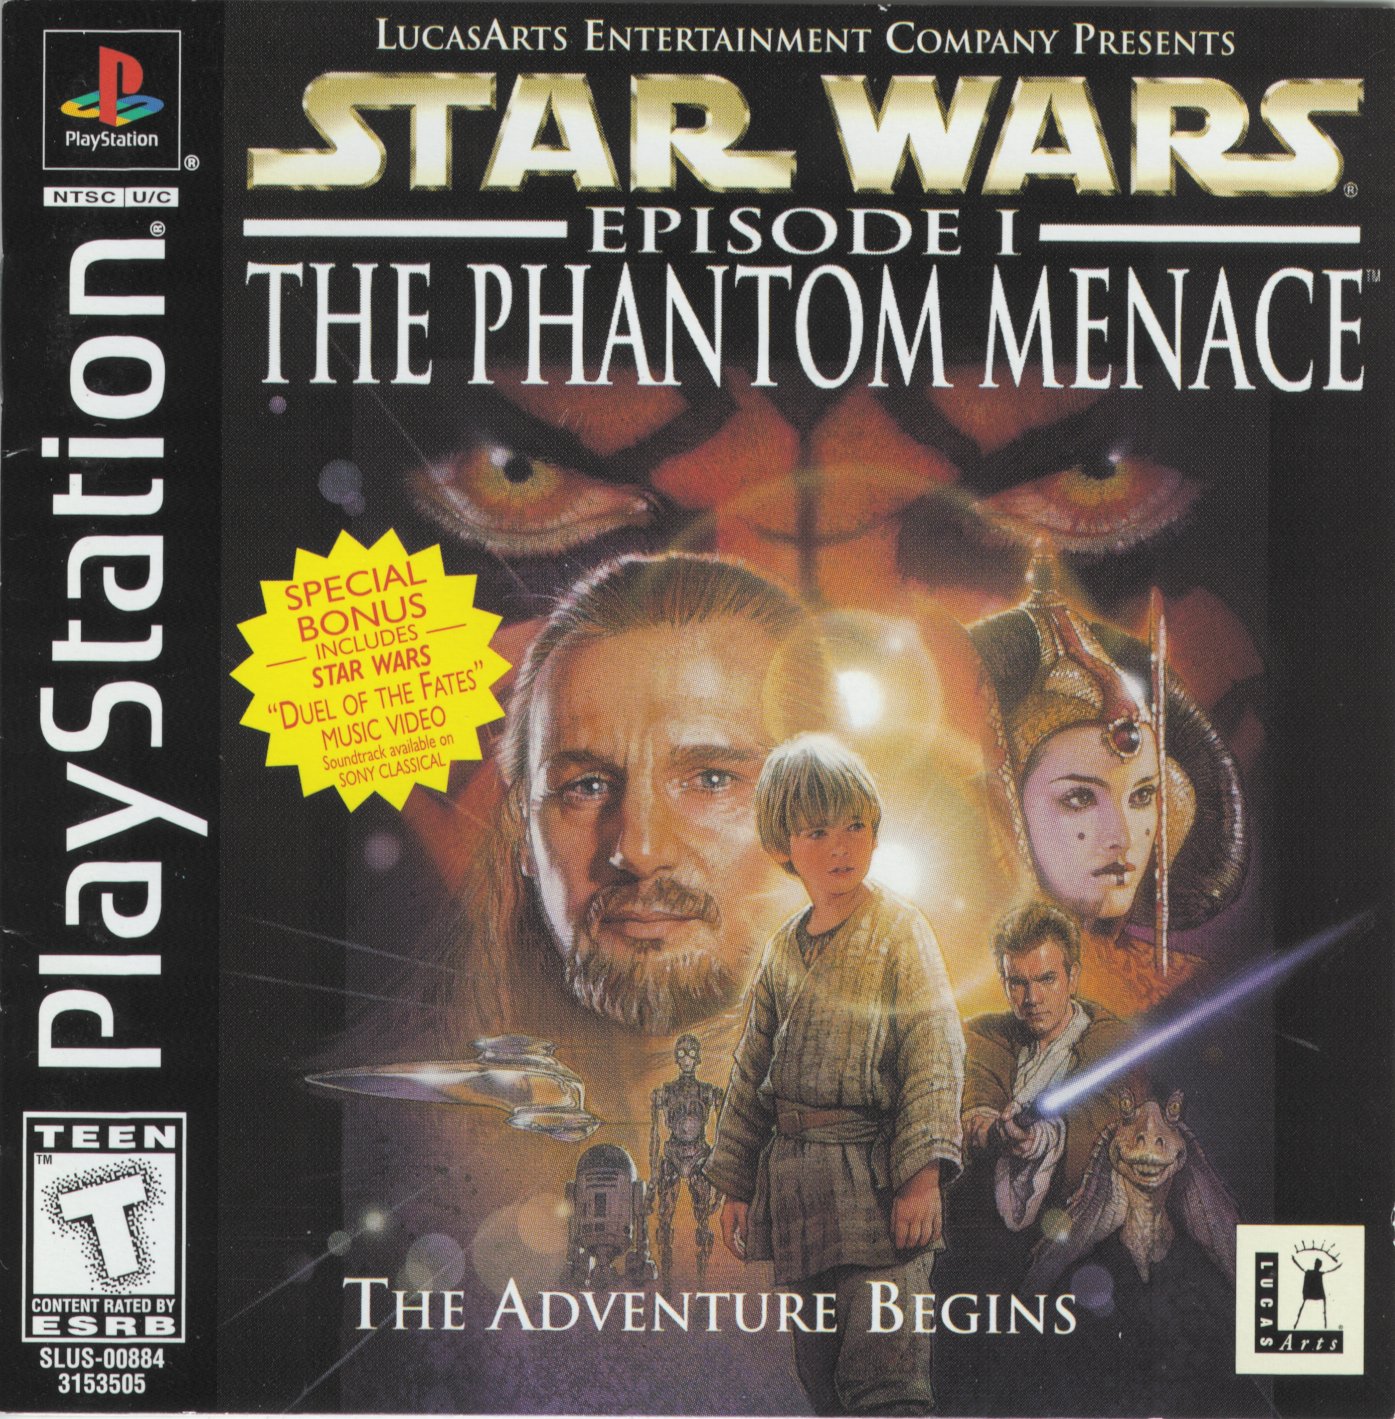 Star Wars - The Phantom Menace PSX cover